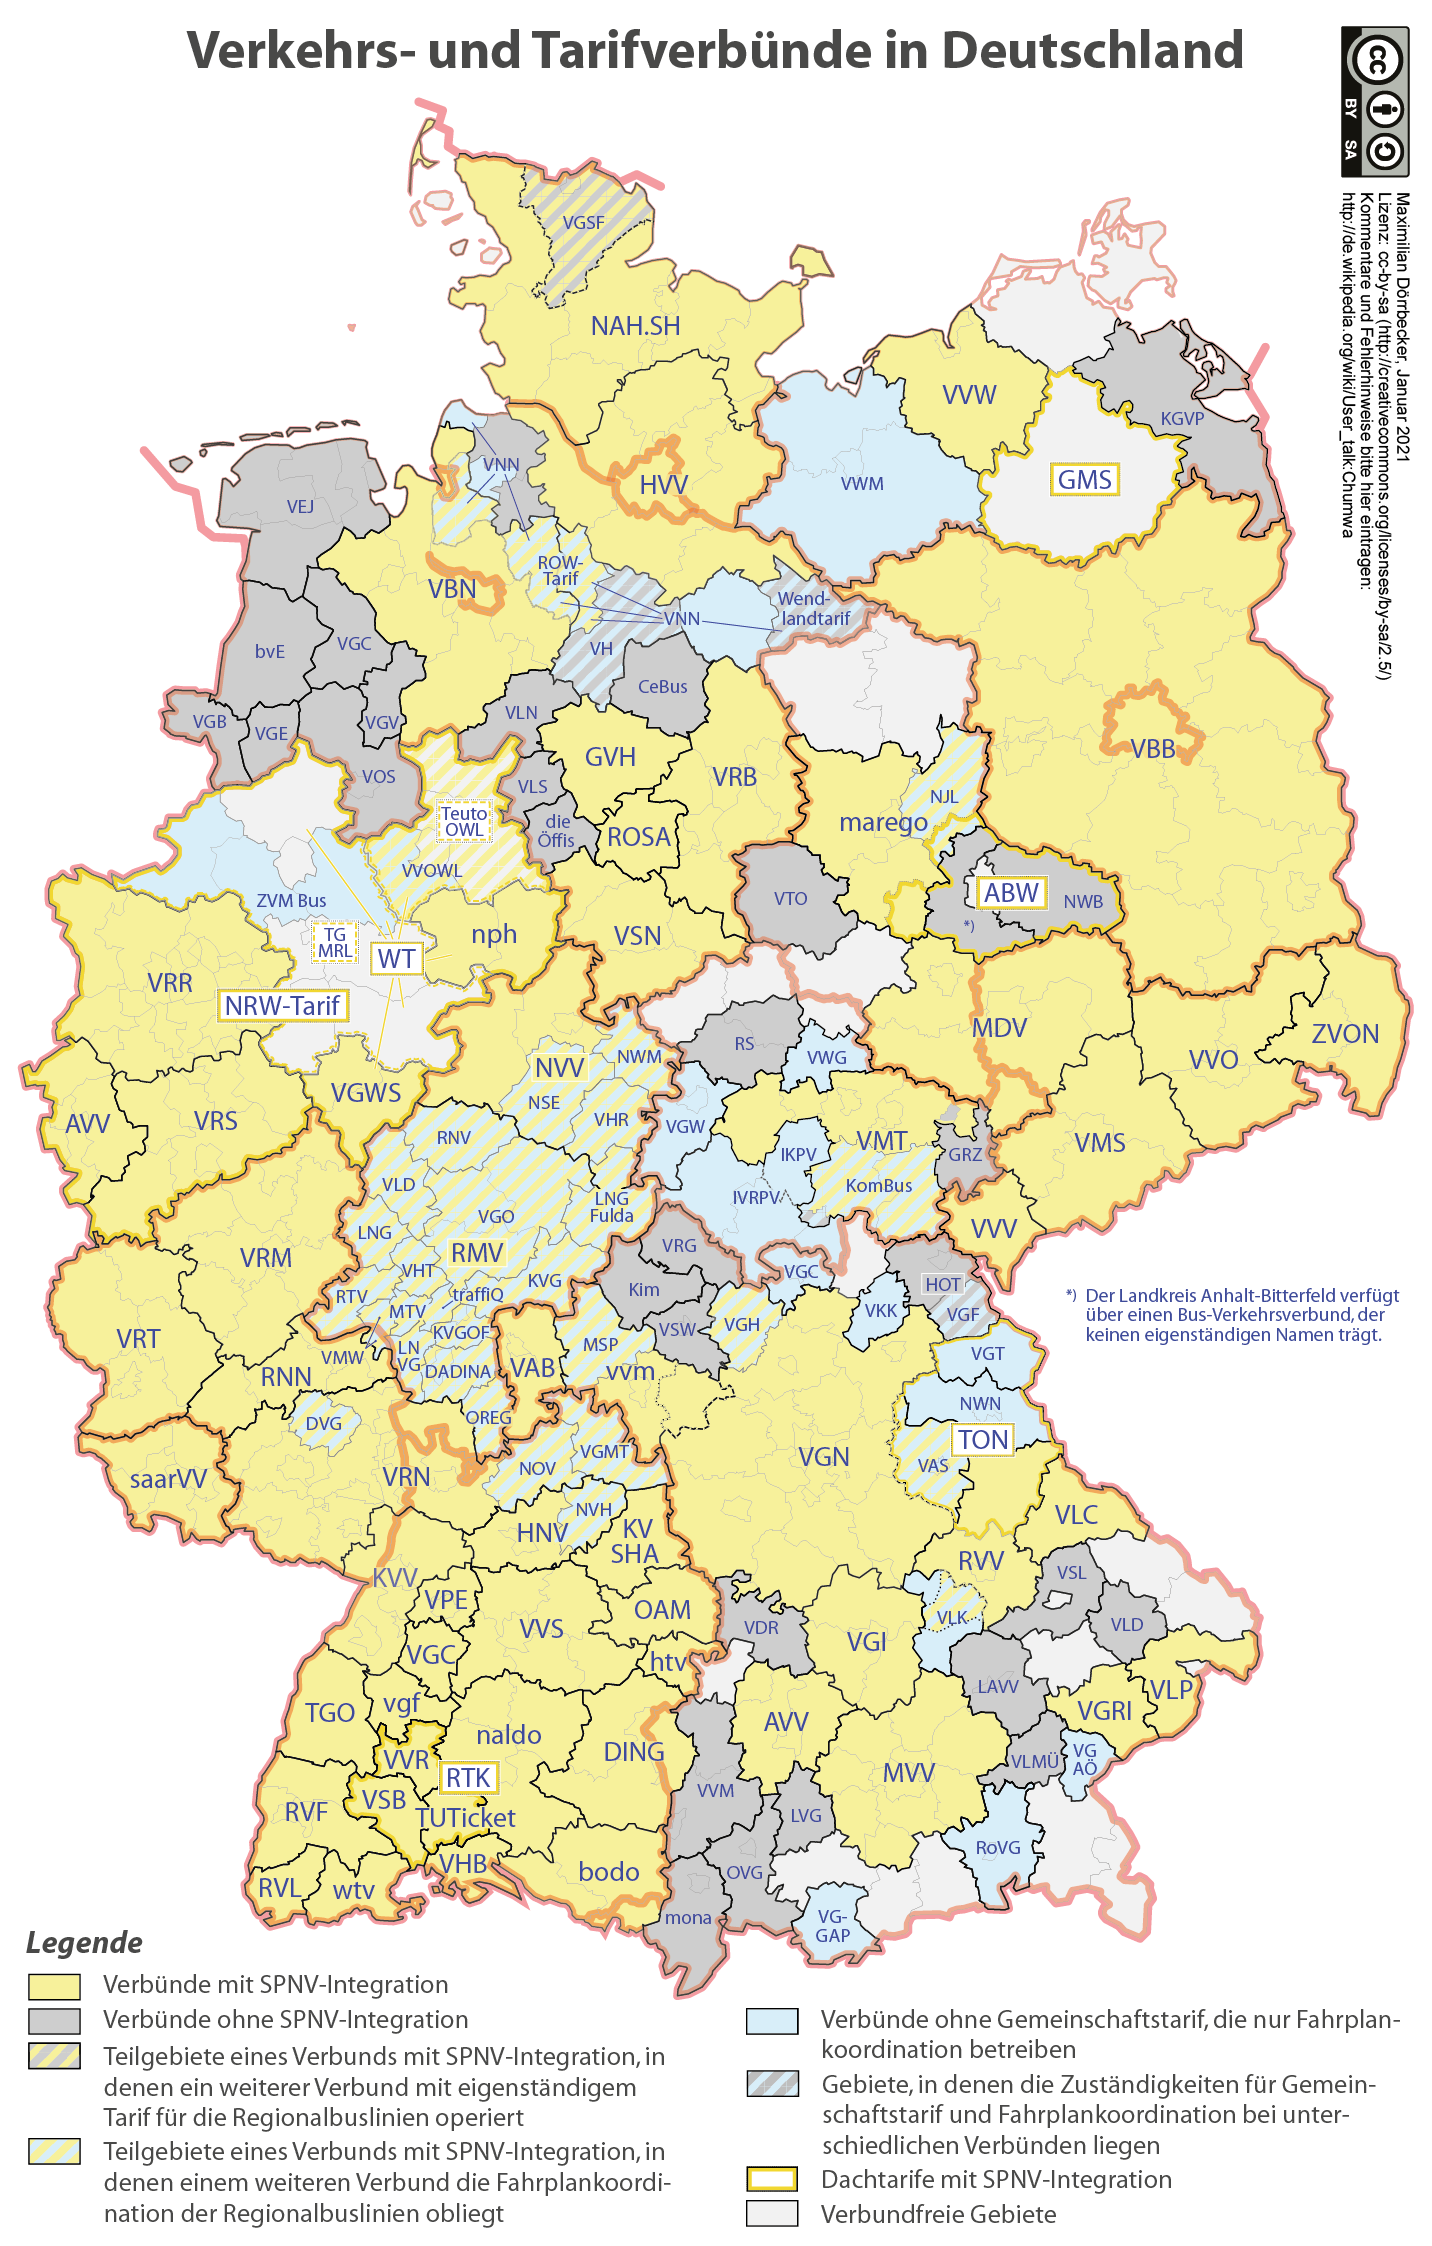 Public Transport Associations in Germany